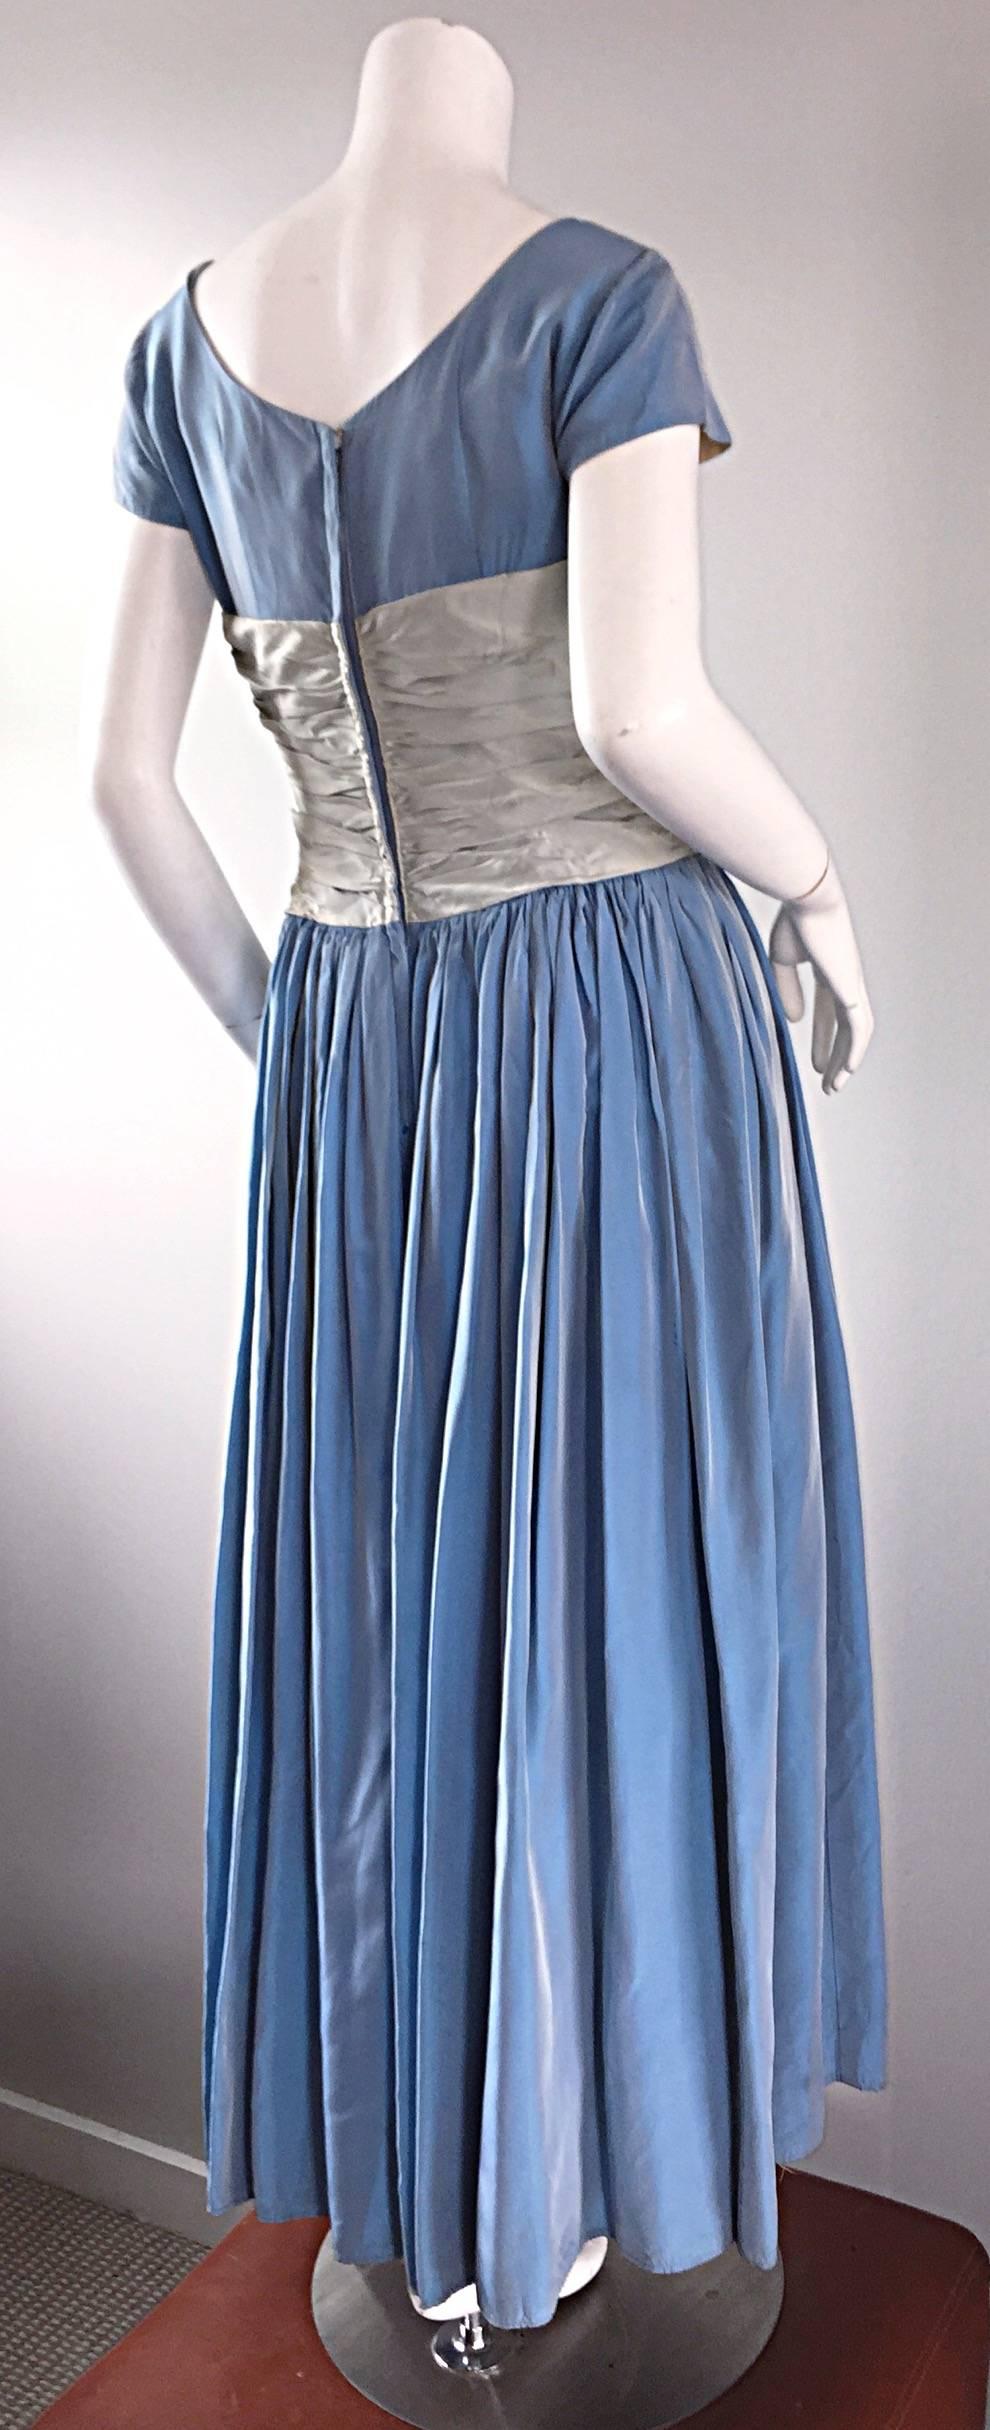 Stunning 1950s blue silk taffeta cocktail dress! Channel your inner 